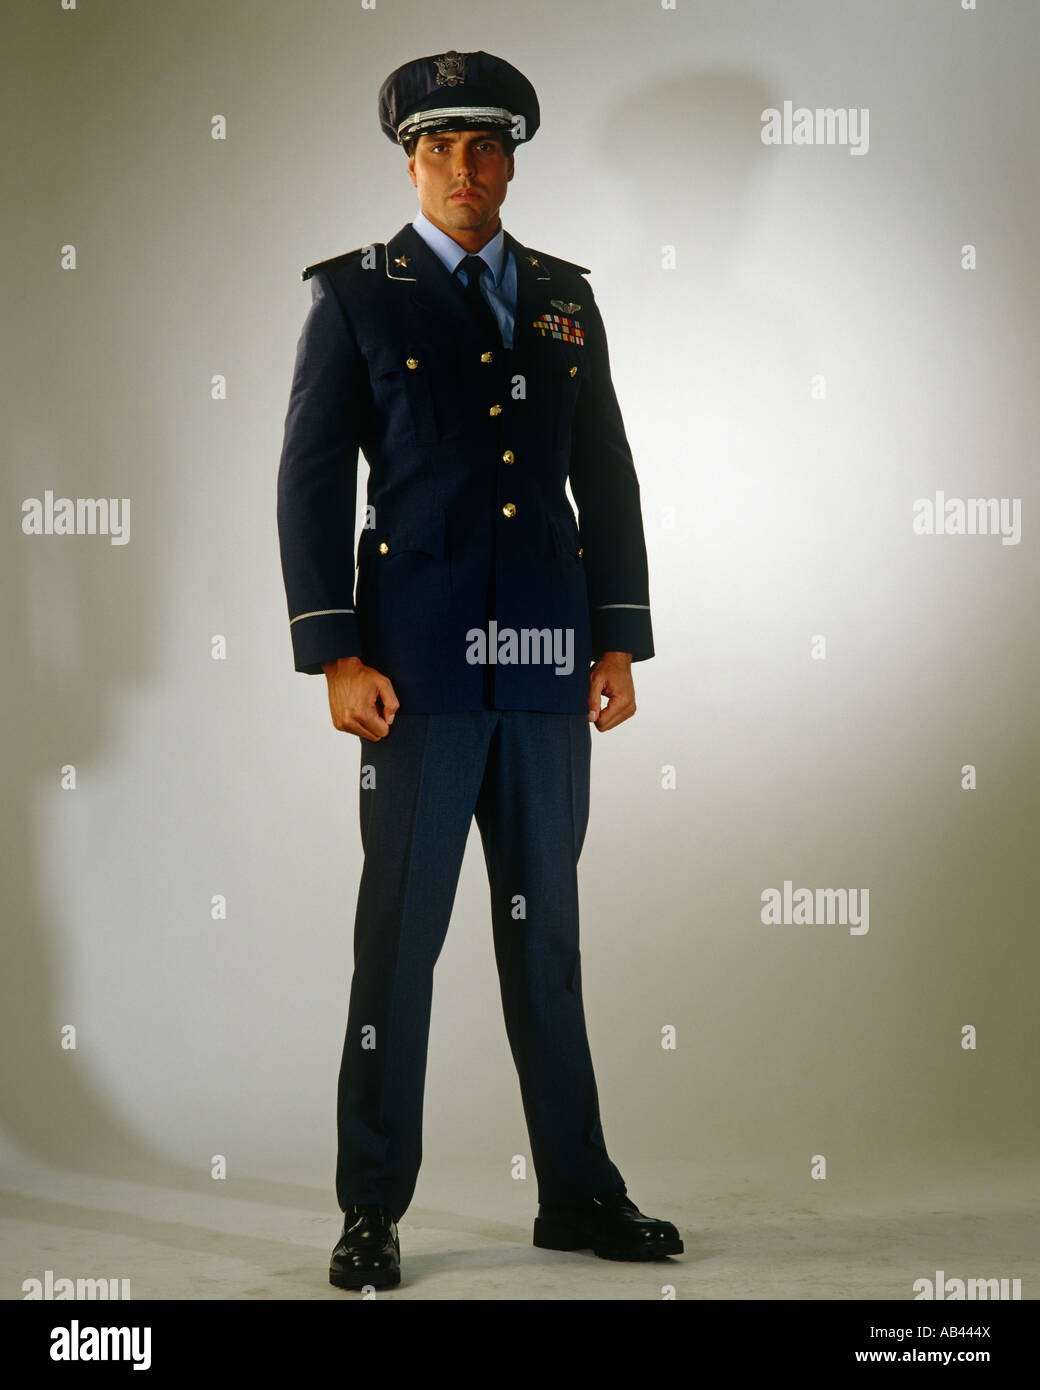 Man in police uniform Stock Photo